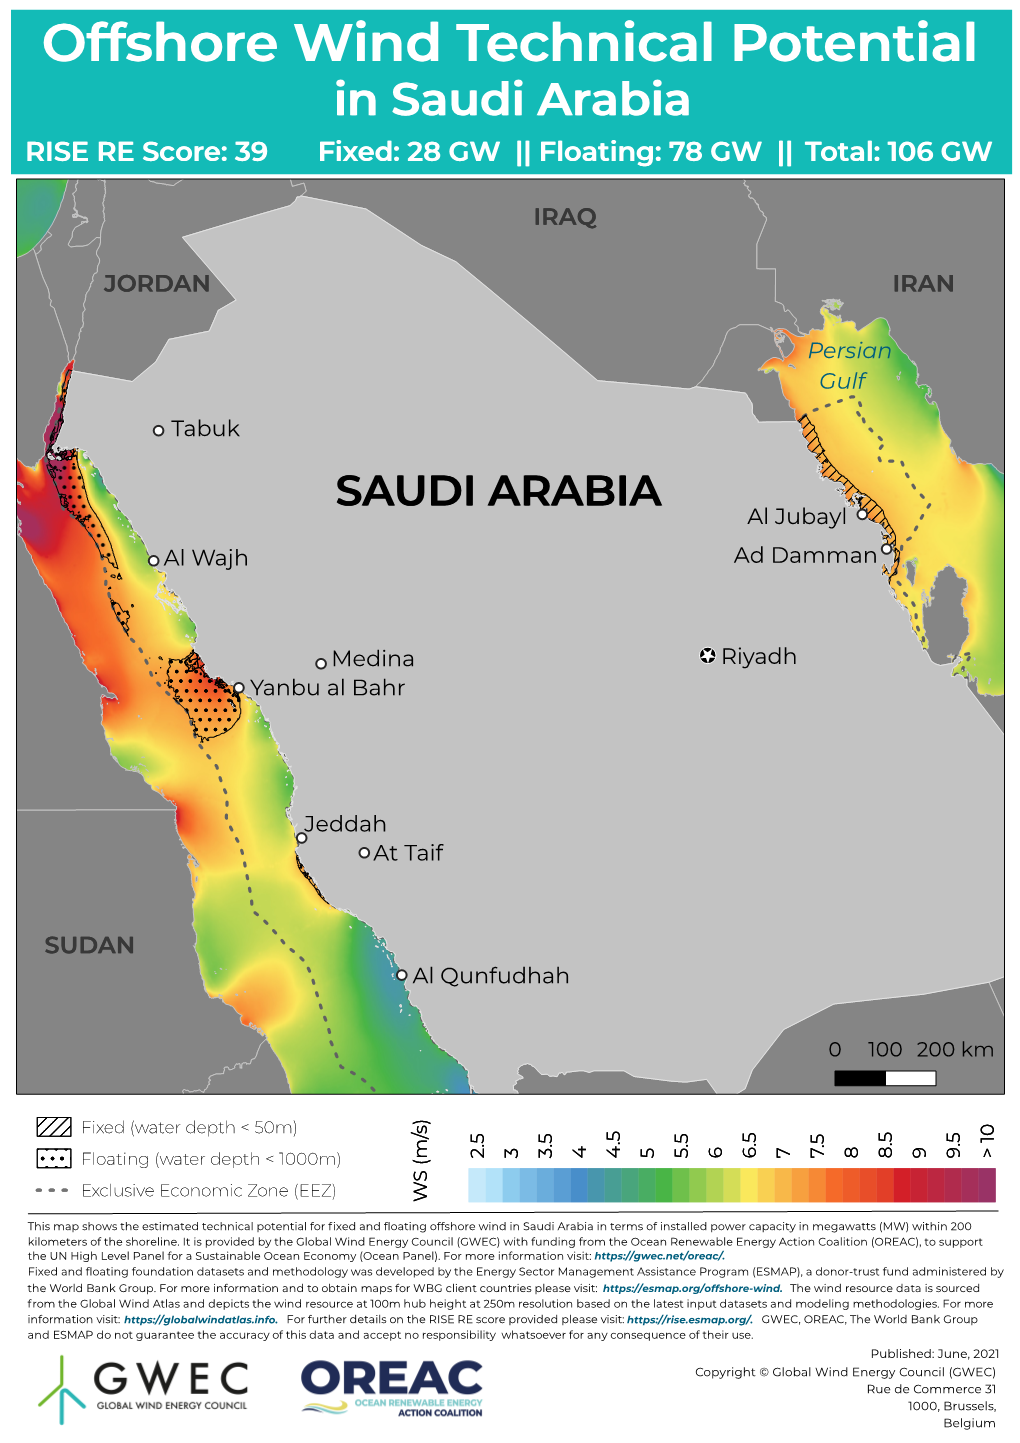 Saudi Arabia RISE RE Score: 39 Fixed: 28 GW || Floating: 78 GW || Total: 106 GW